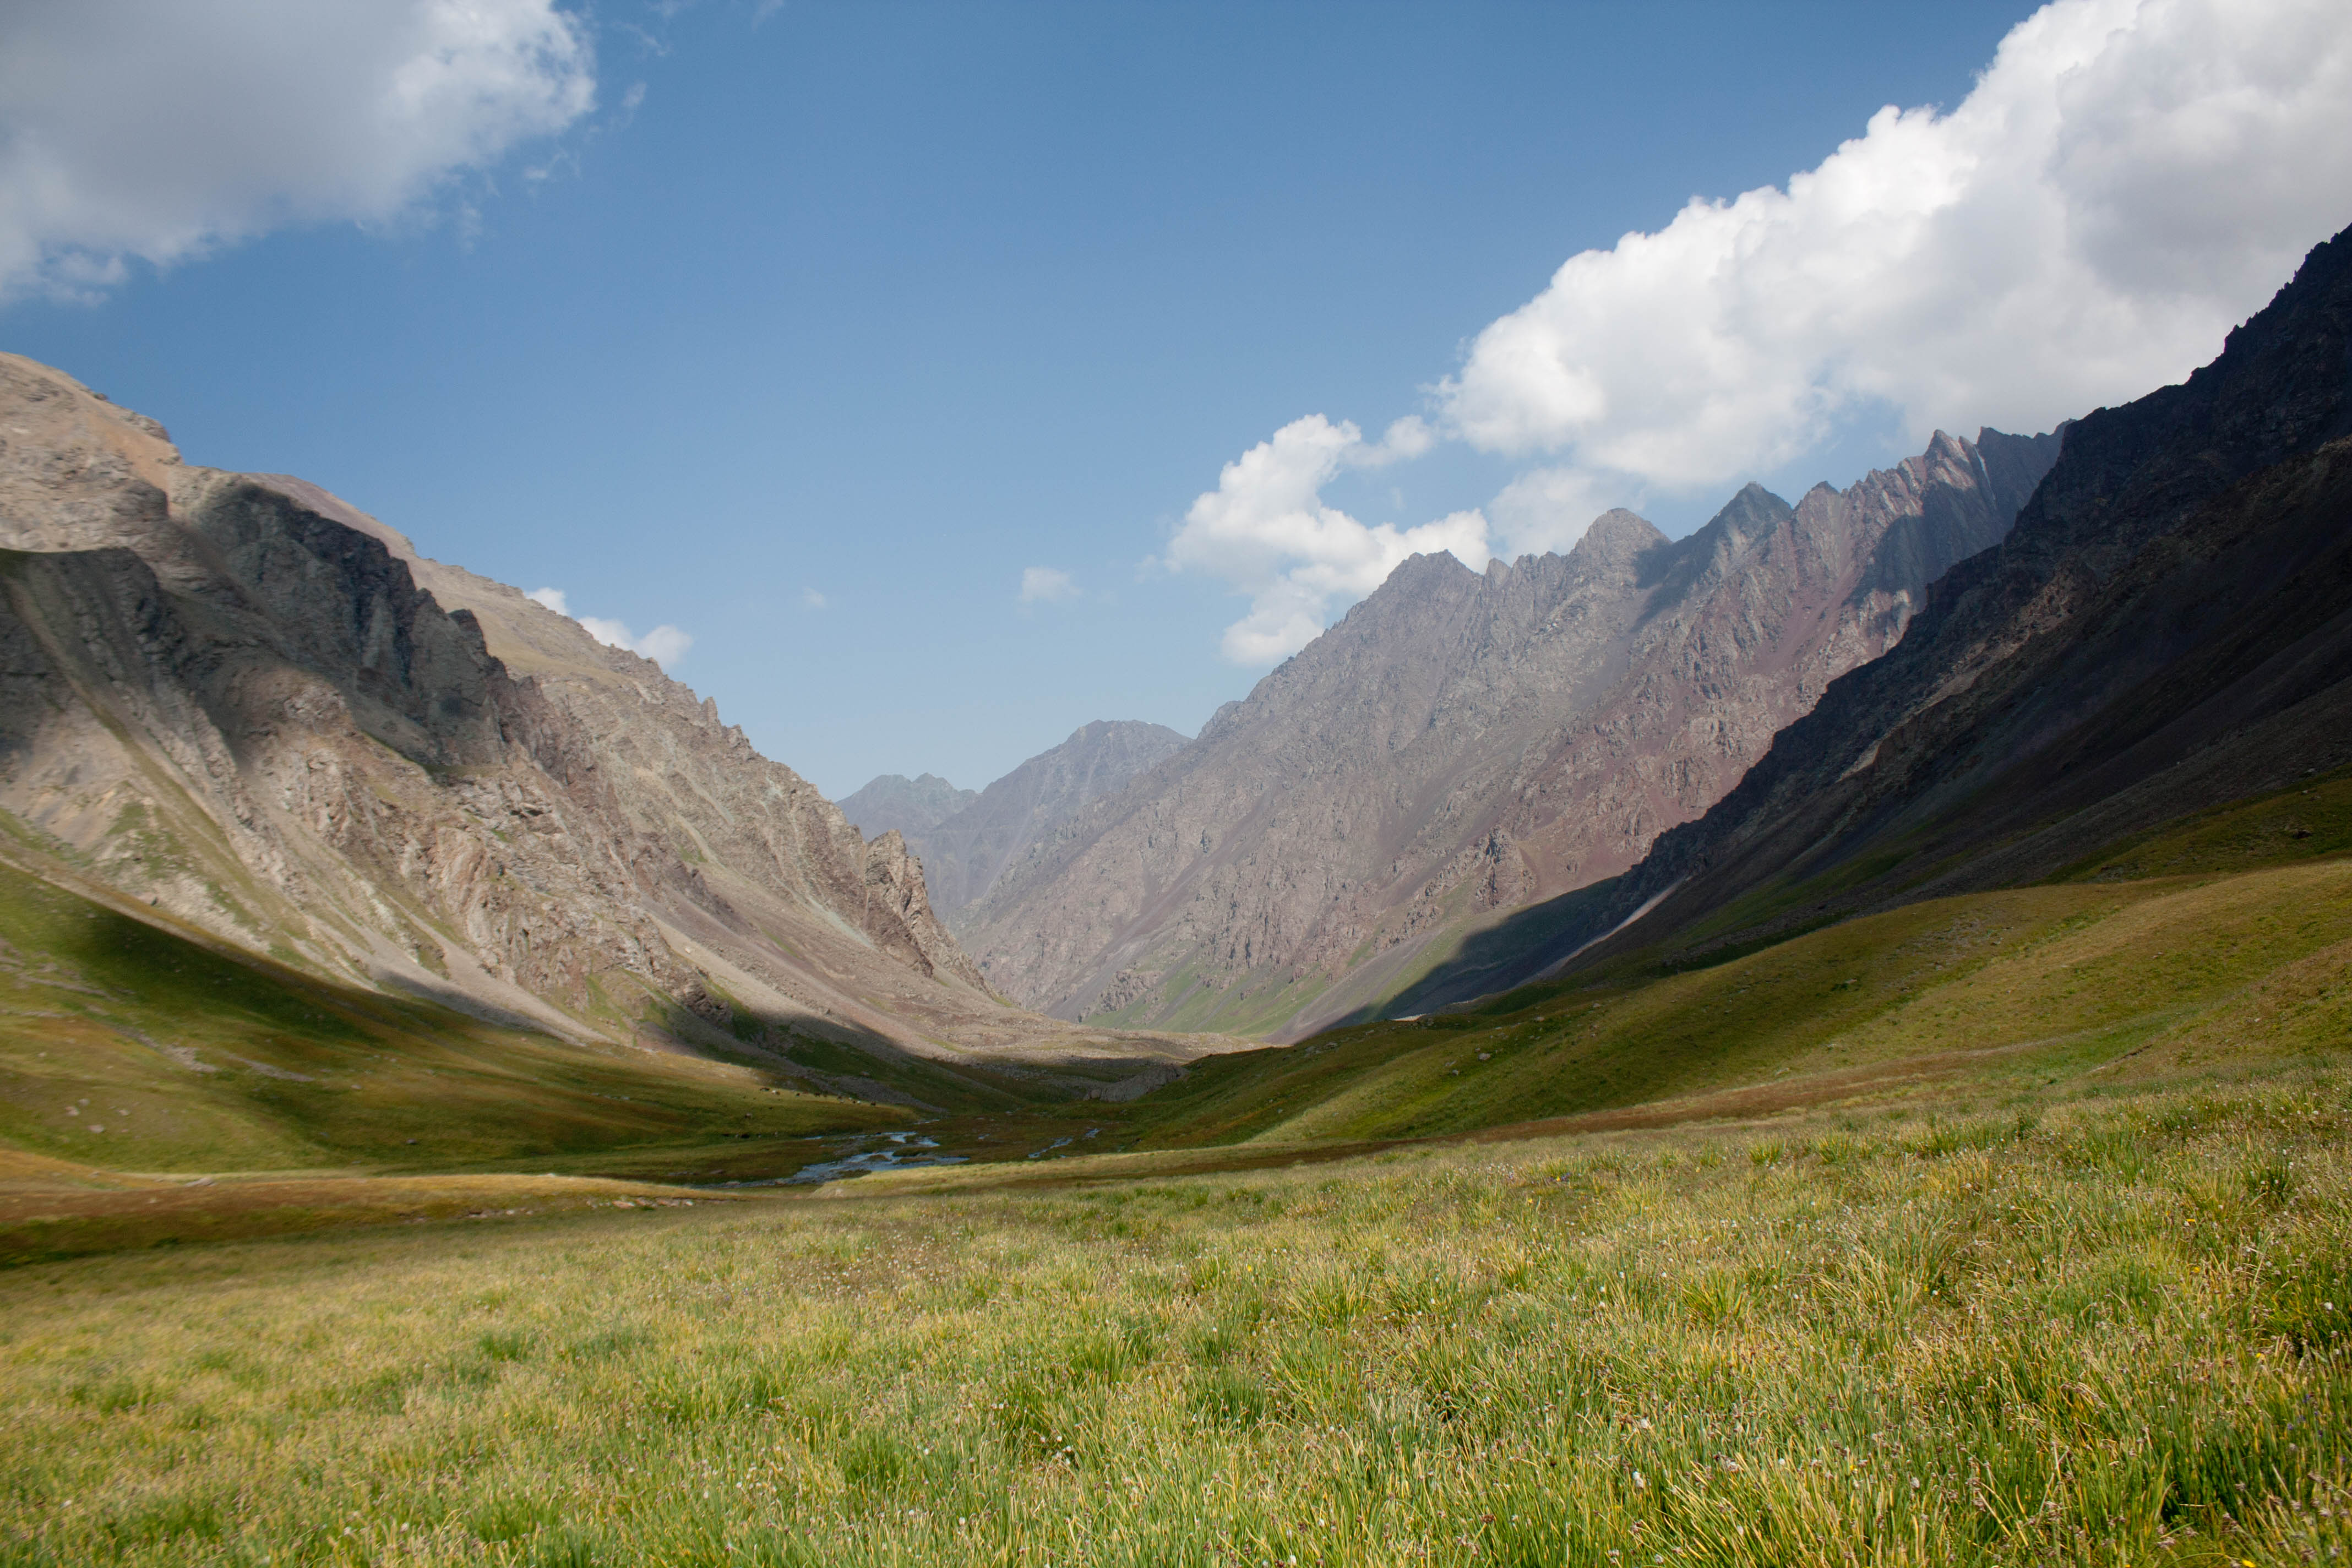 Кыргызстан это киргизия или нет. АК-Суу Киргизия. Киргизия Леонардо. Природа Кыргызстана. Горы Кыргызстана.